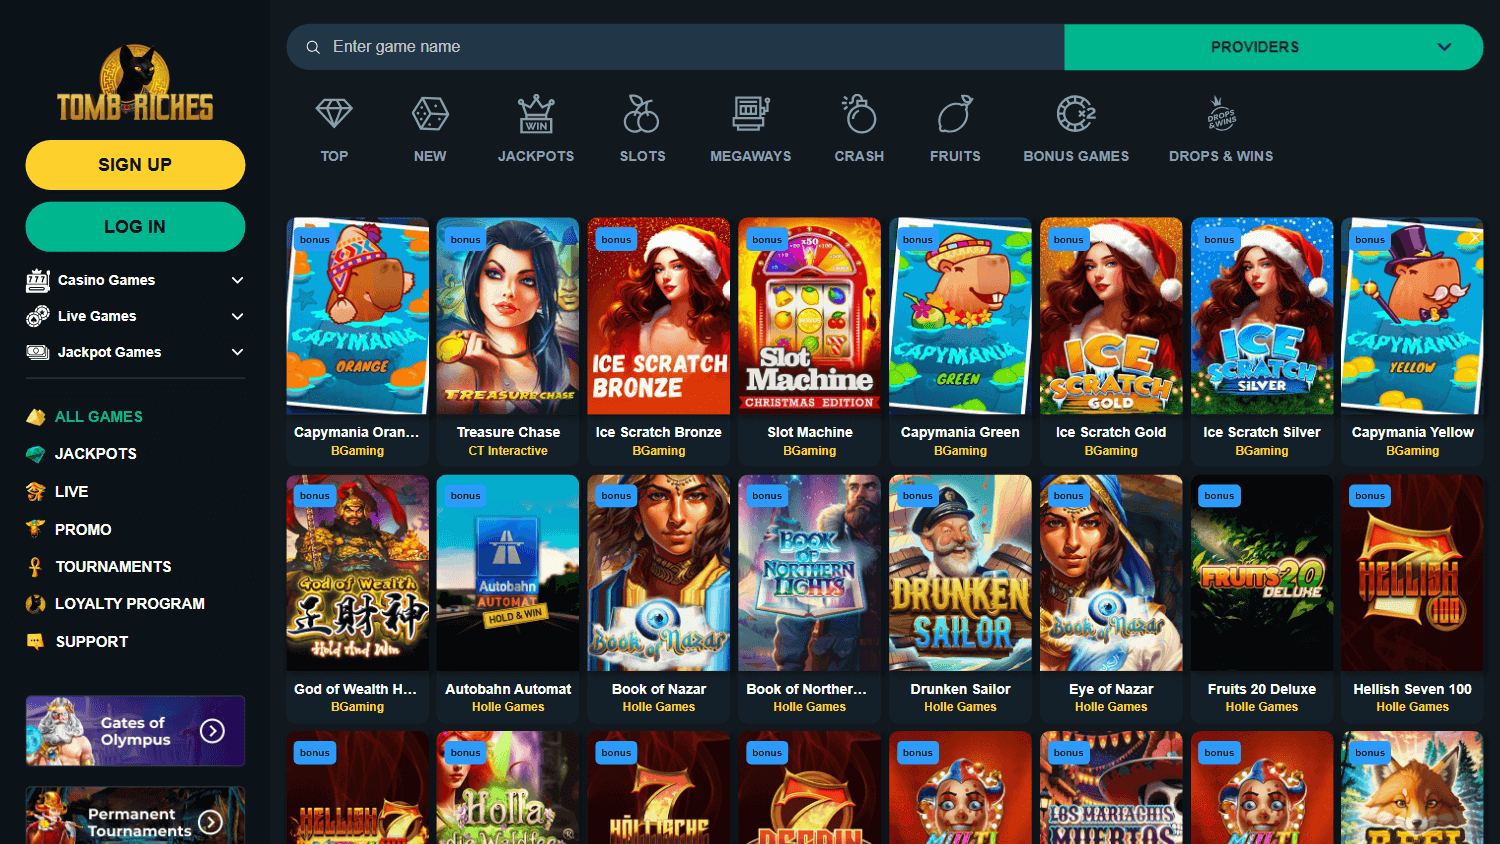 tombriches_casino_game_gallery_desktop